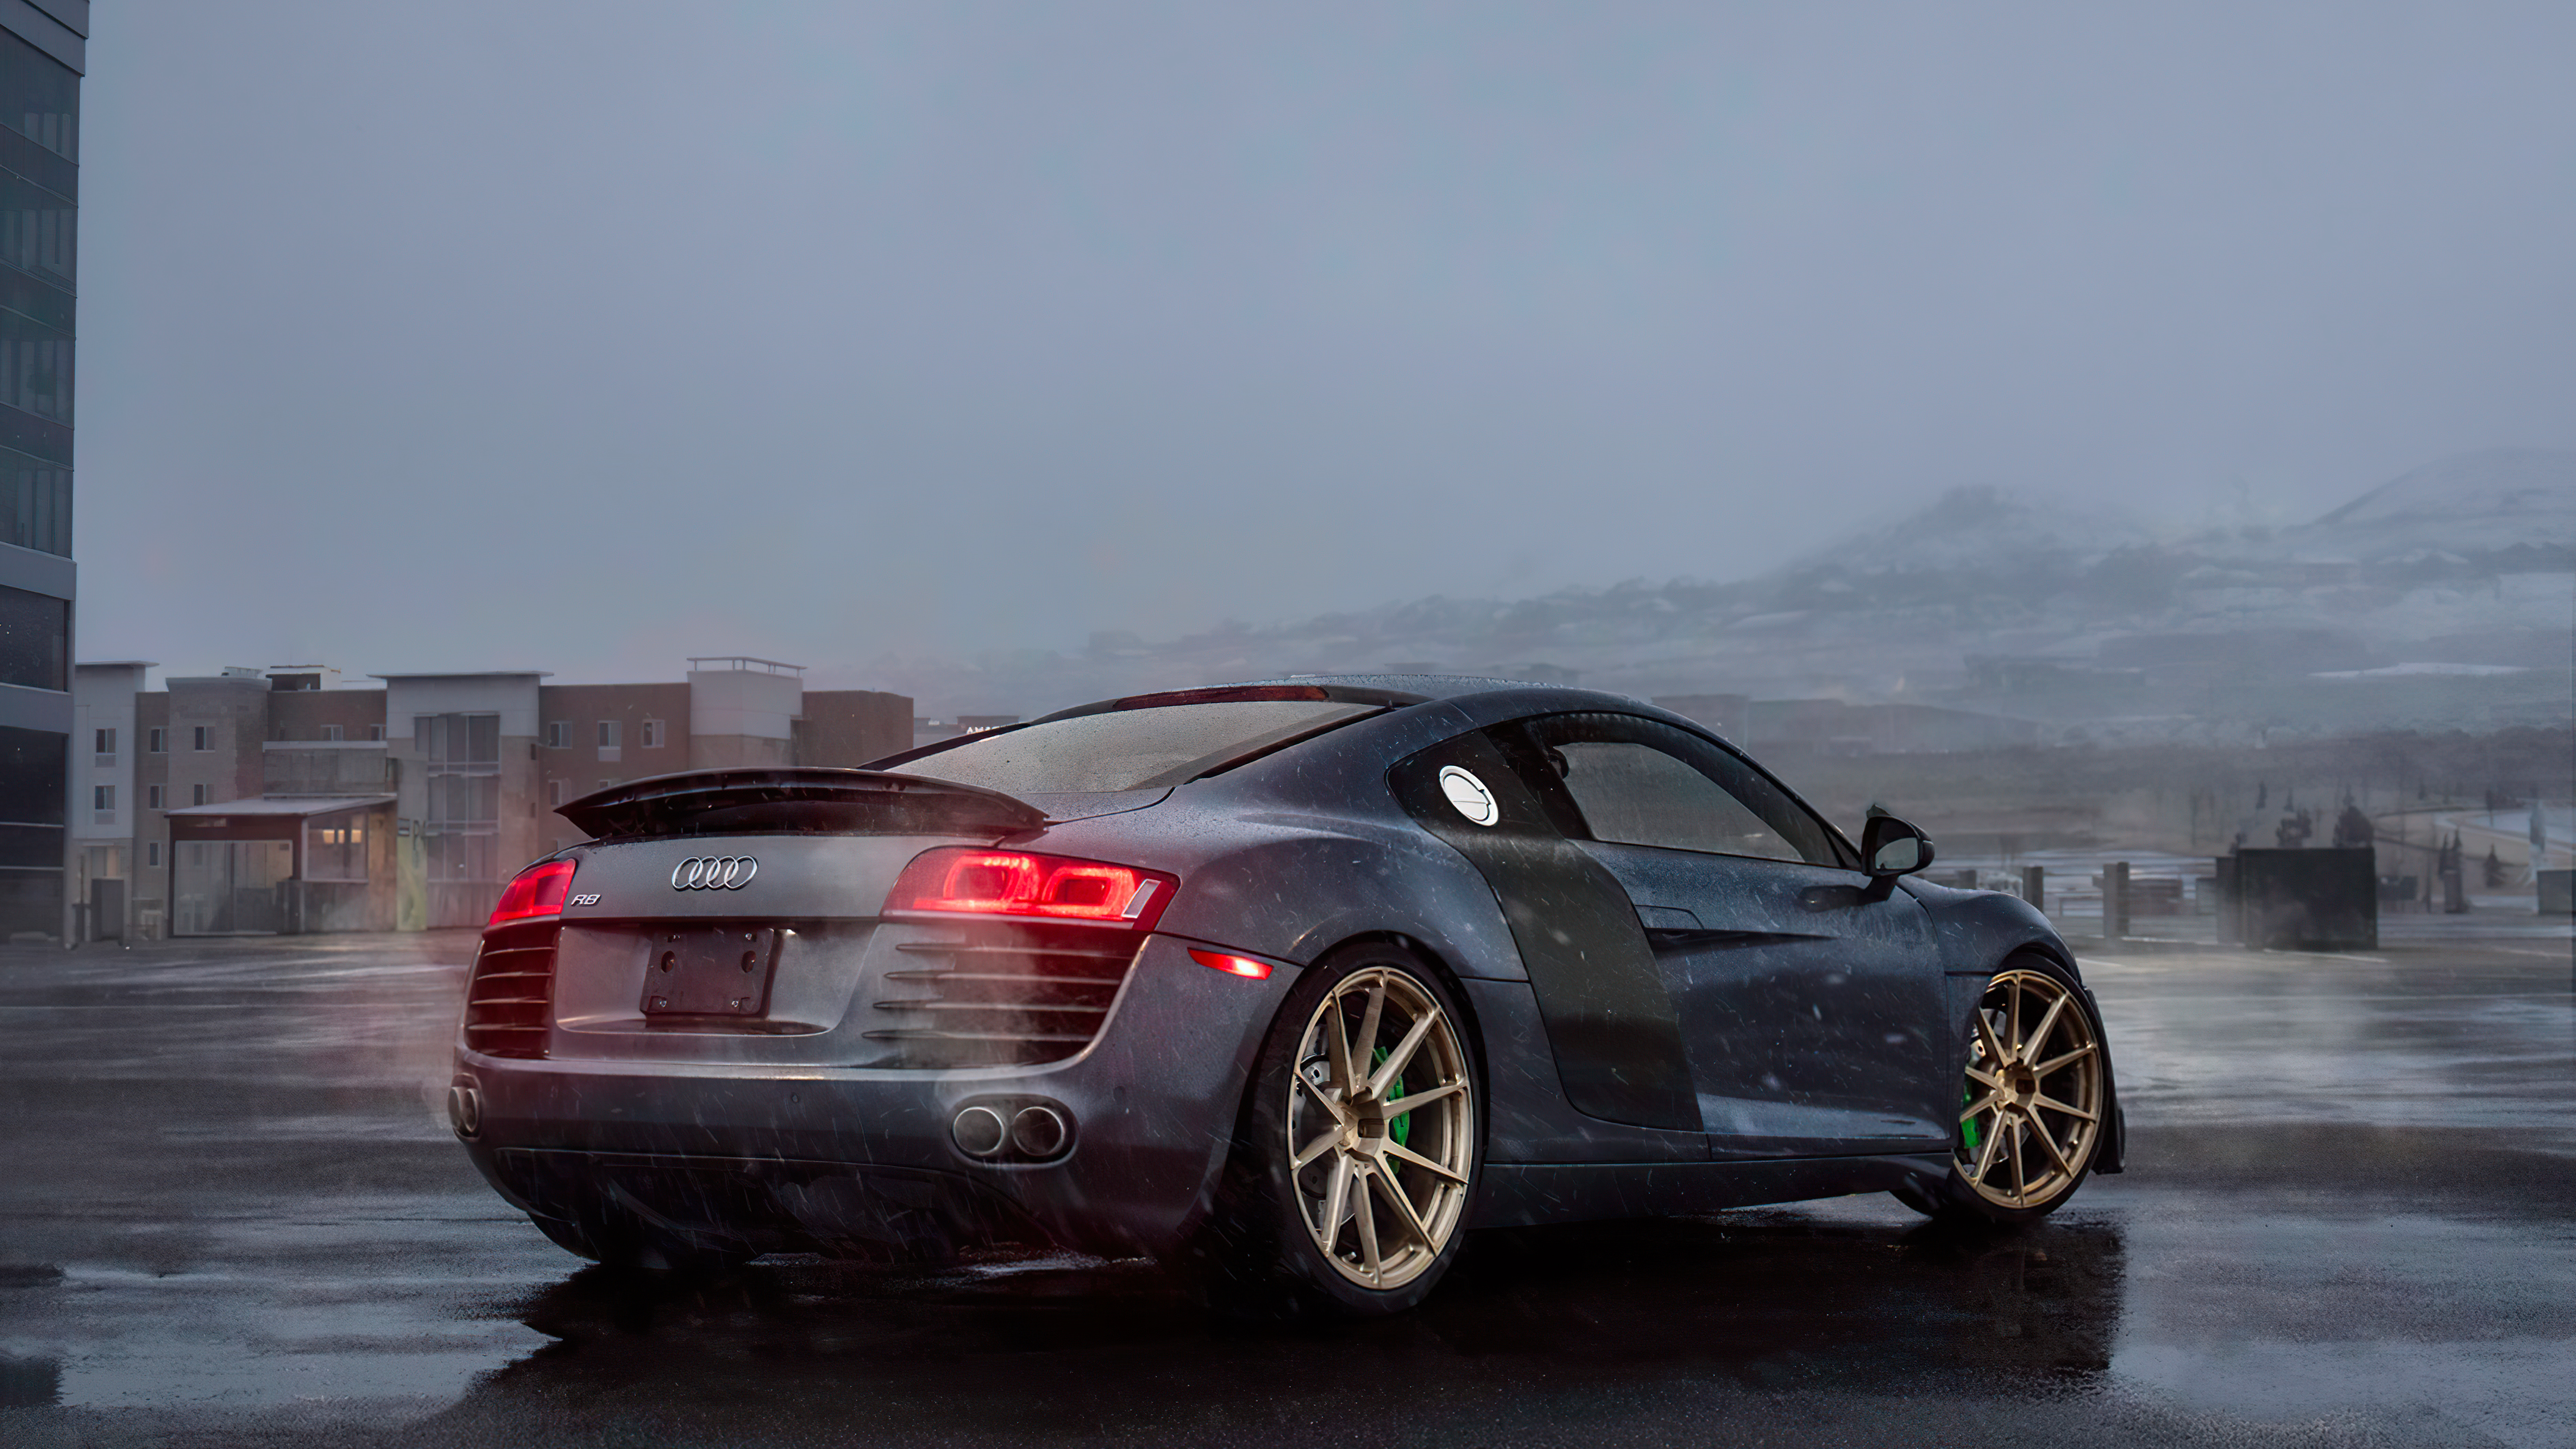 Fondos de pantalla Audi R8 concept